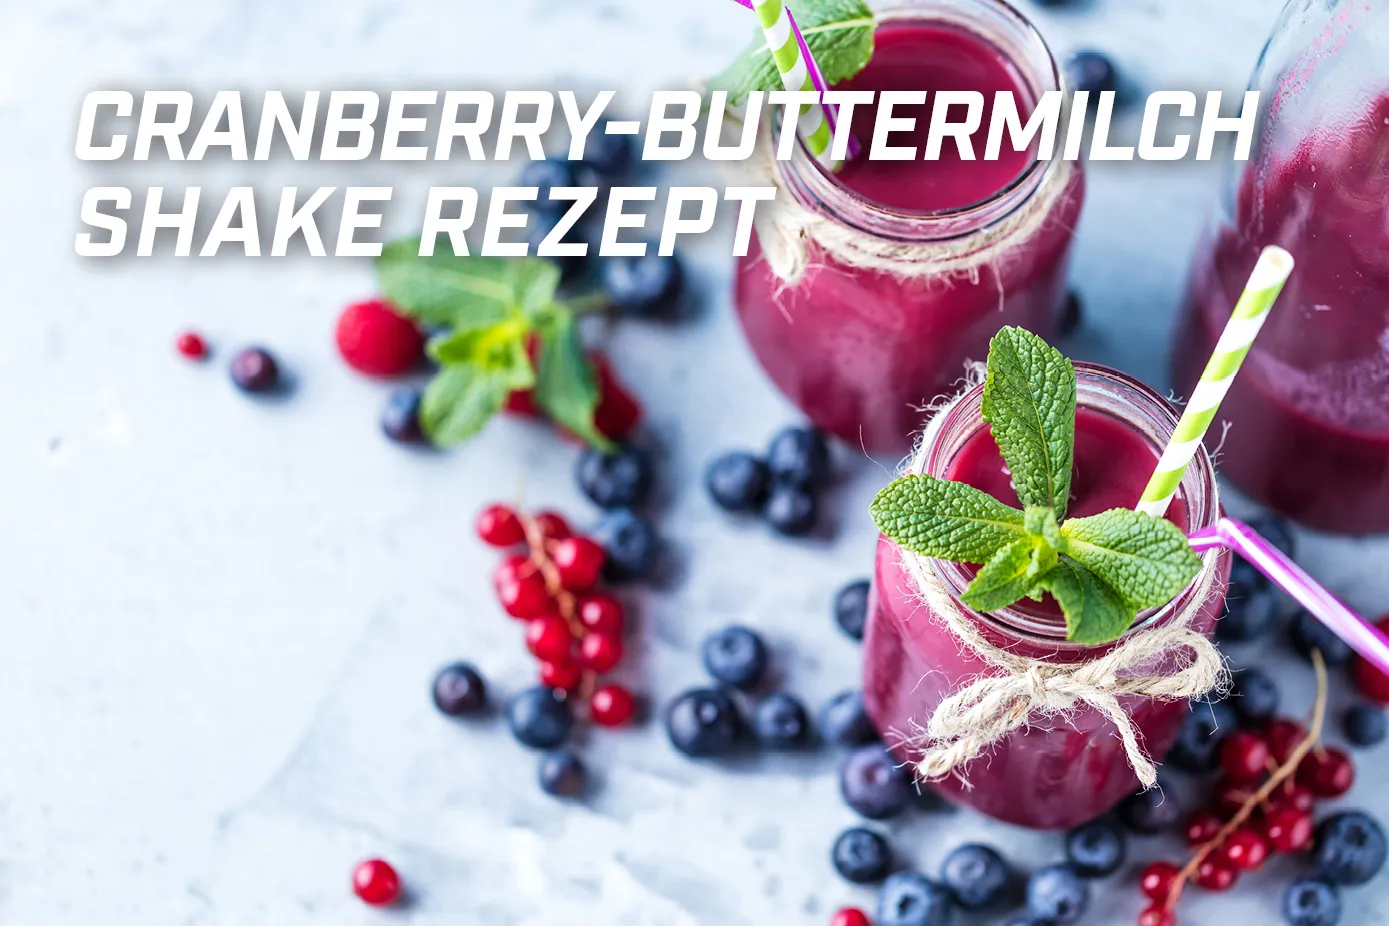 15-02-18-cranberry-buttermilch-shake-rezept-energybody-systems